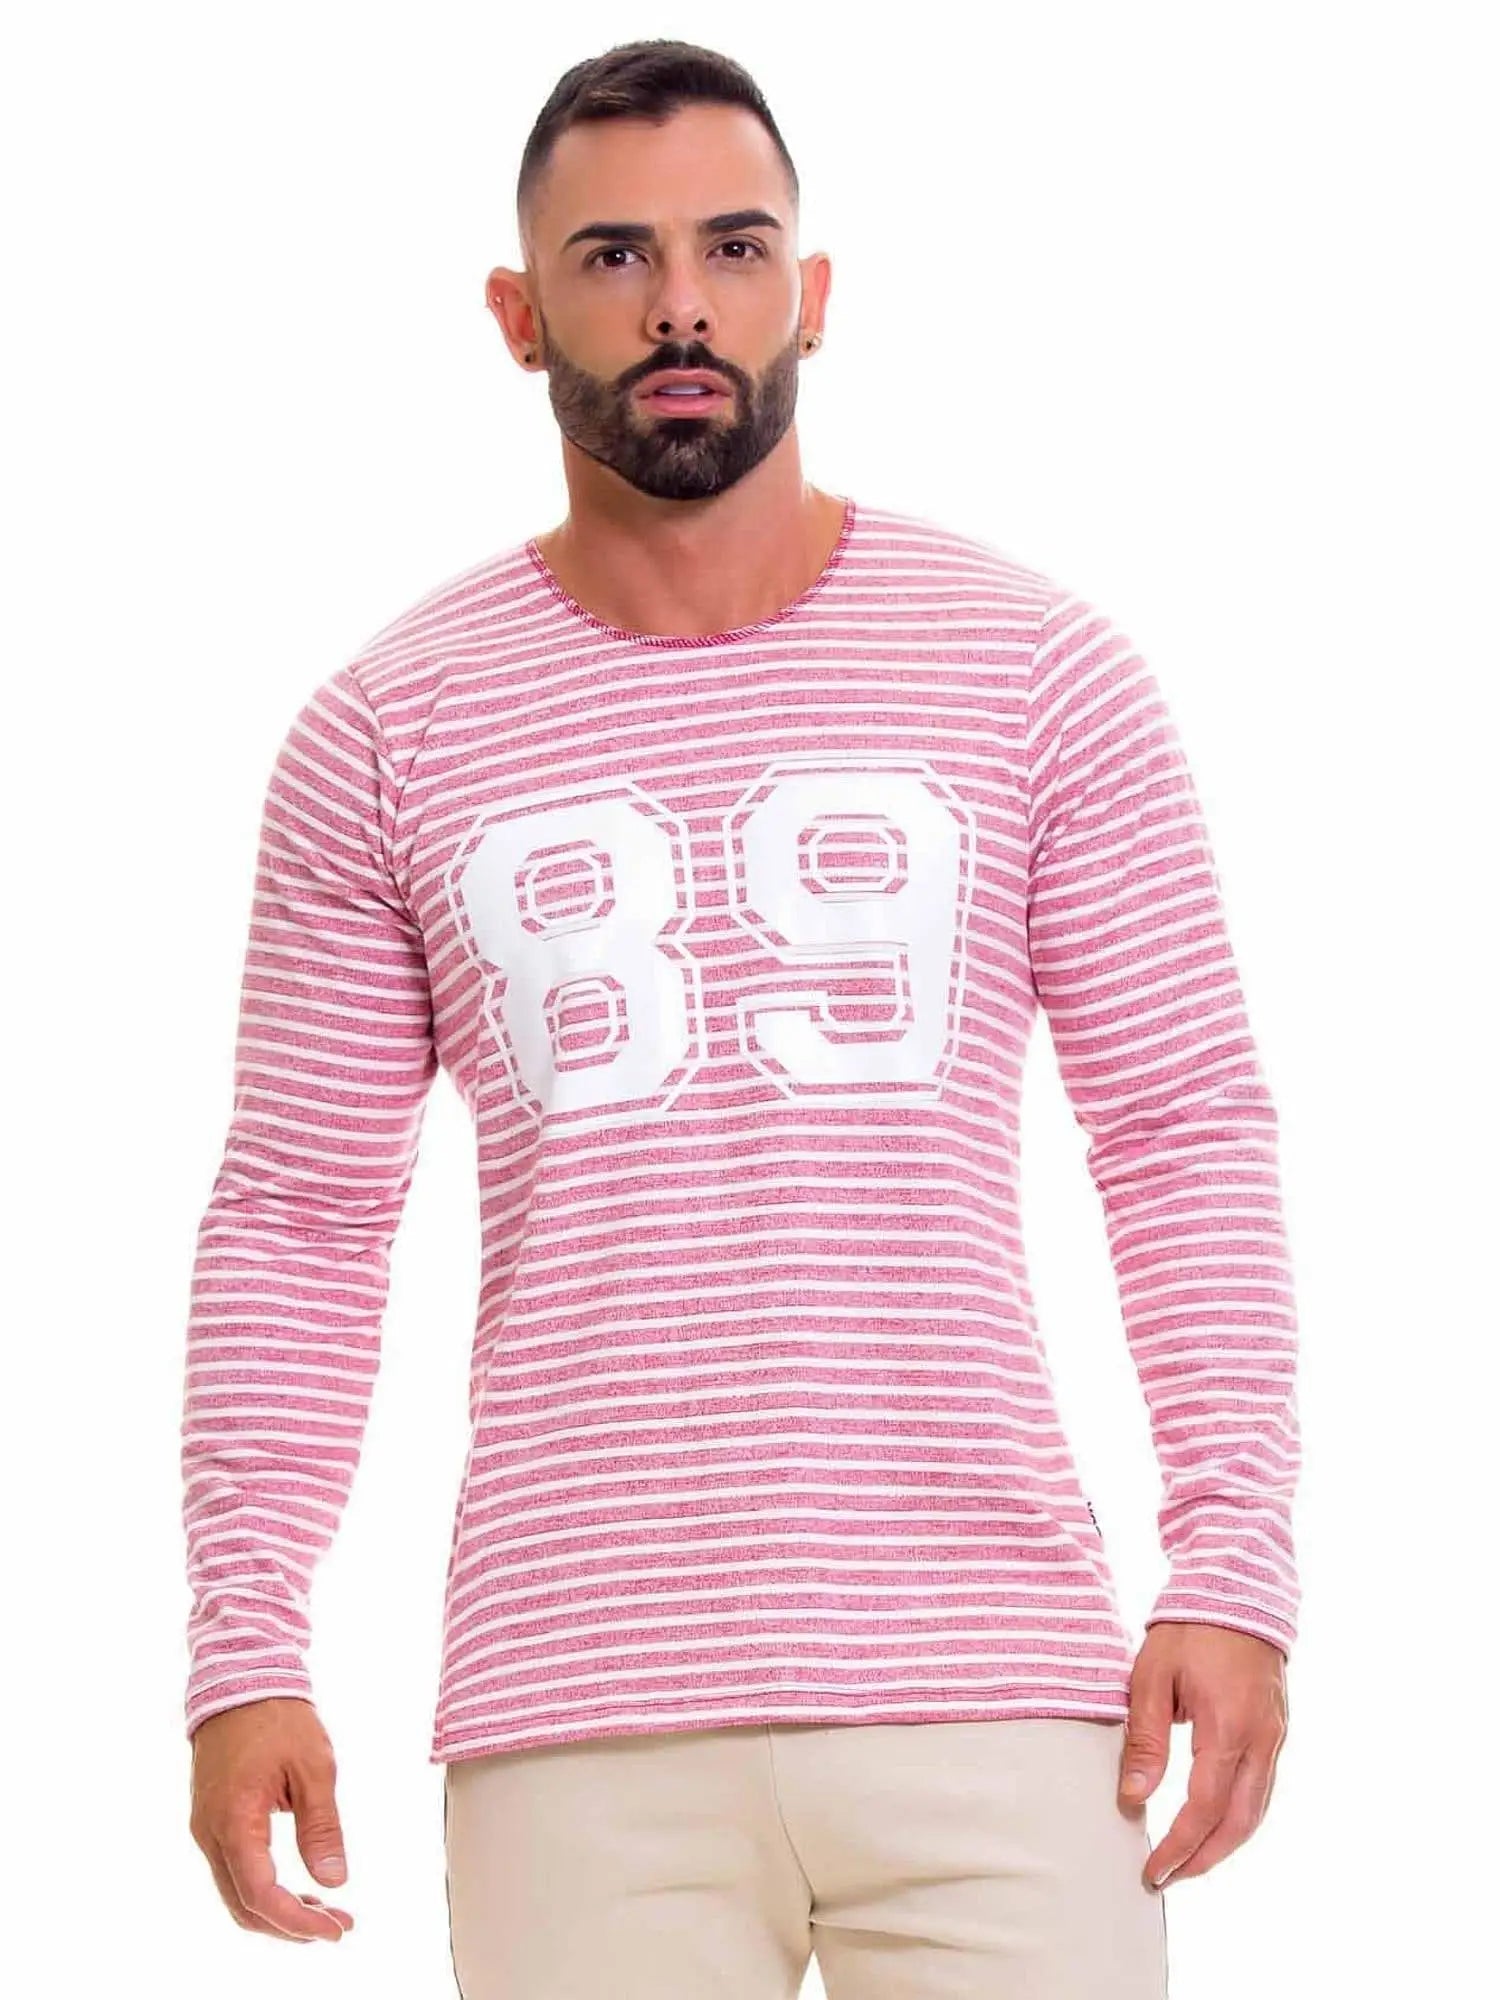 JOR 0677 Herren Longarm T-Shirt Loungewear Sweatshirt Pullover - noodosz